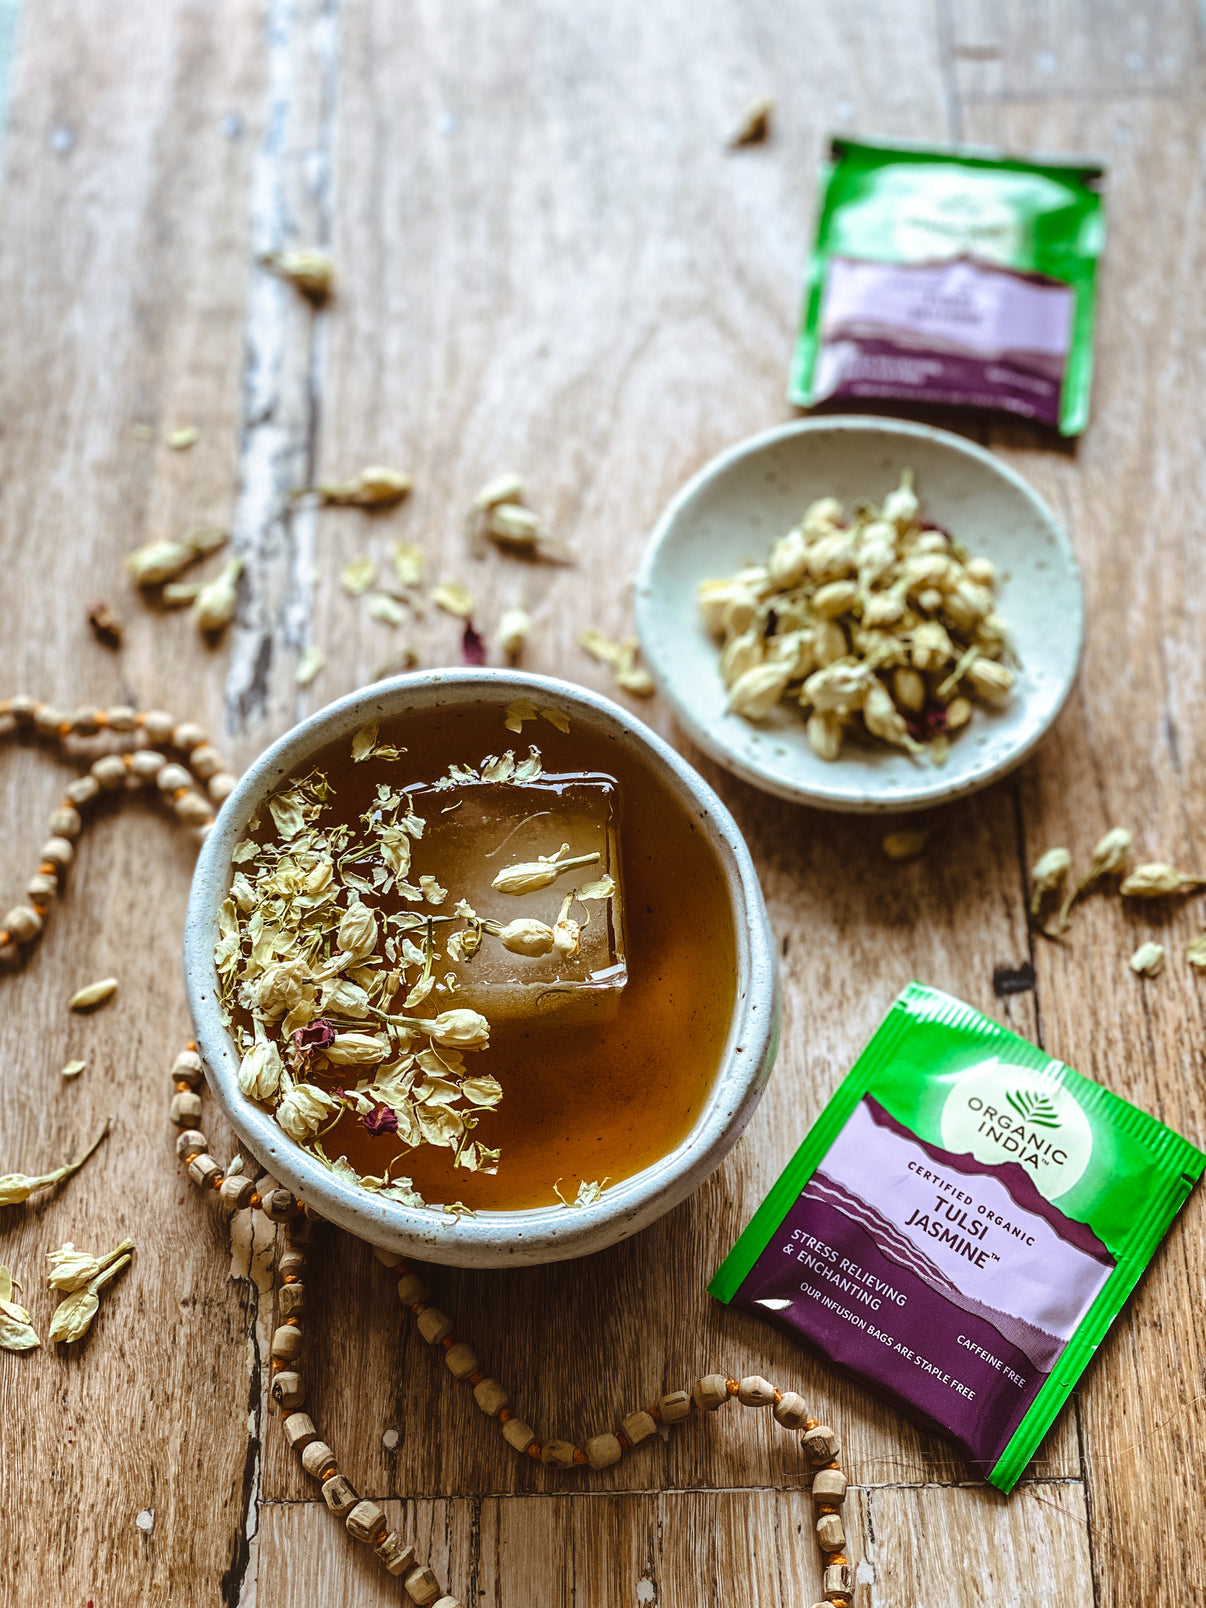 Organic India Wellness Tea Tulsi Jasmine Tea, 25 Herbal Tea Bags; Certified Organic